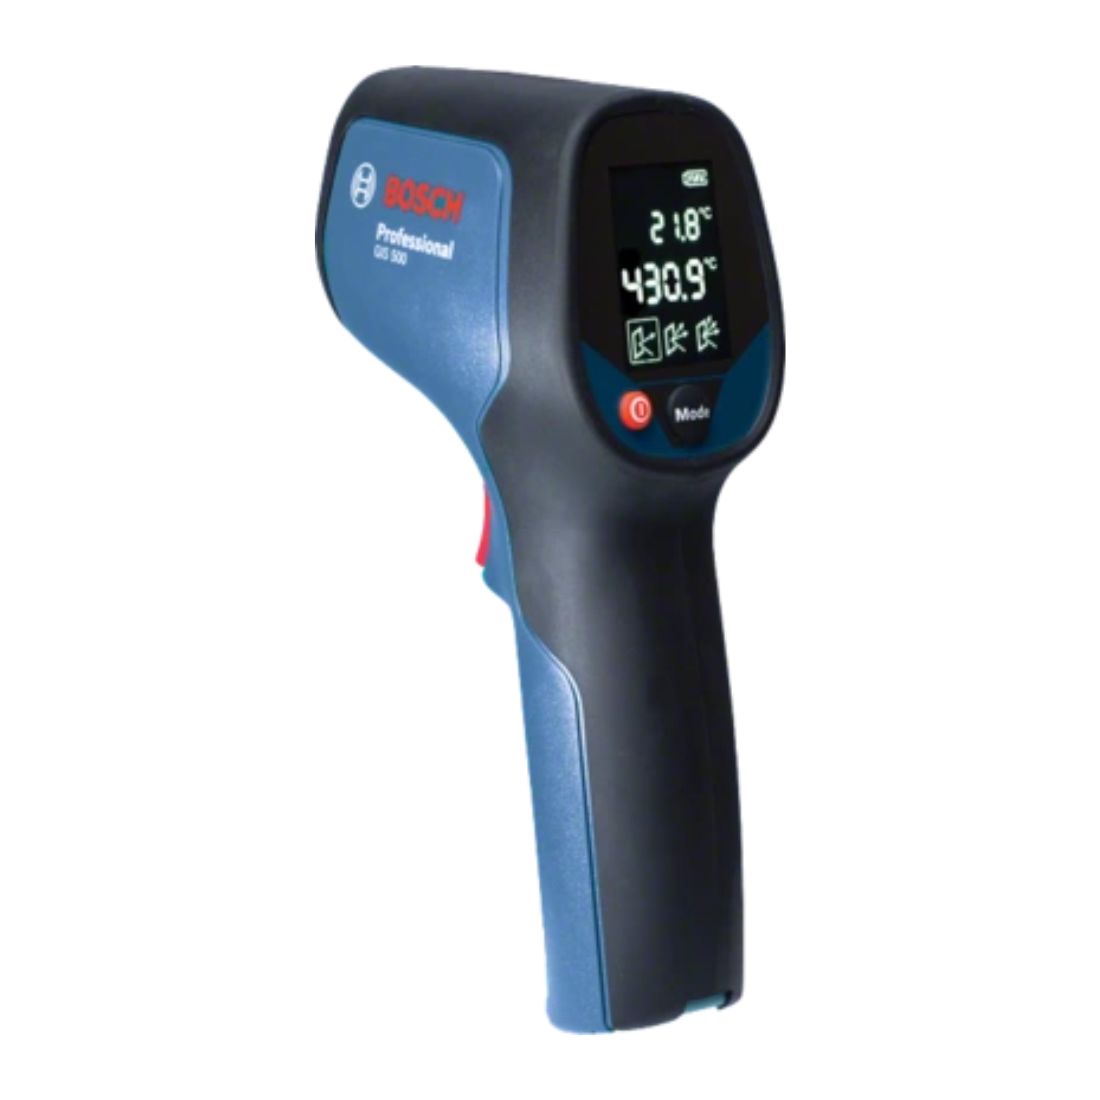 Bosch GIS 500 Temperature Detector 0601083480